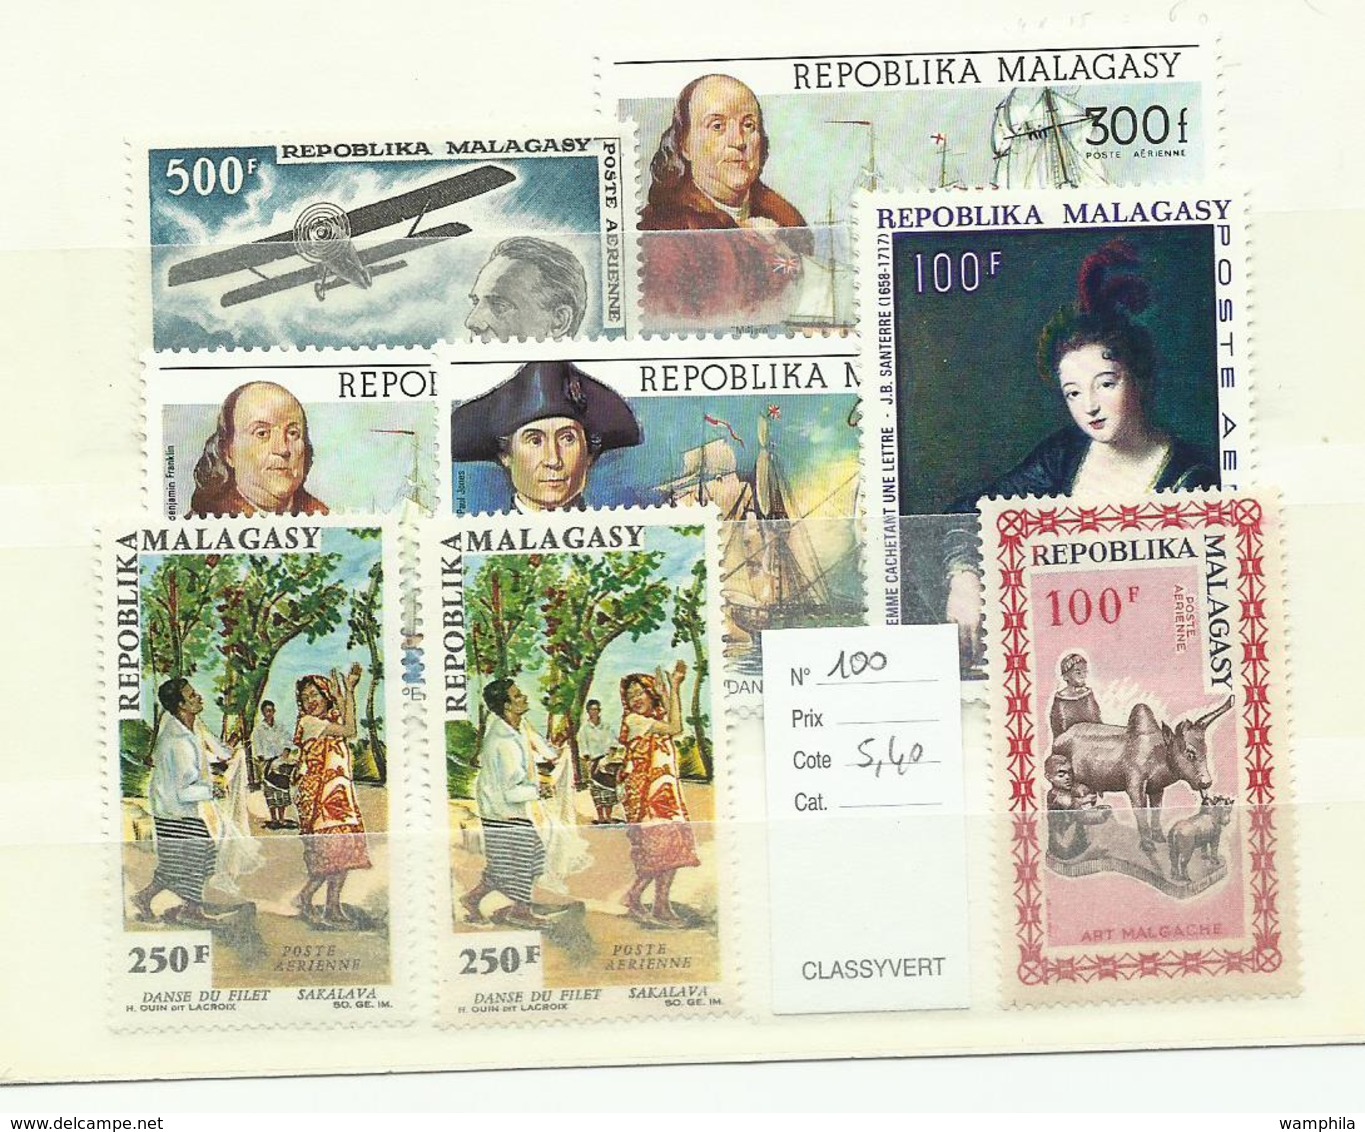 Madagascar, lot neufs, timbres or, thématiques, P.A. blocs souvent **